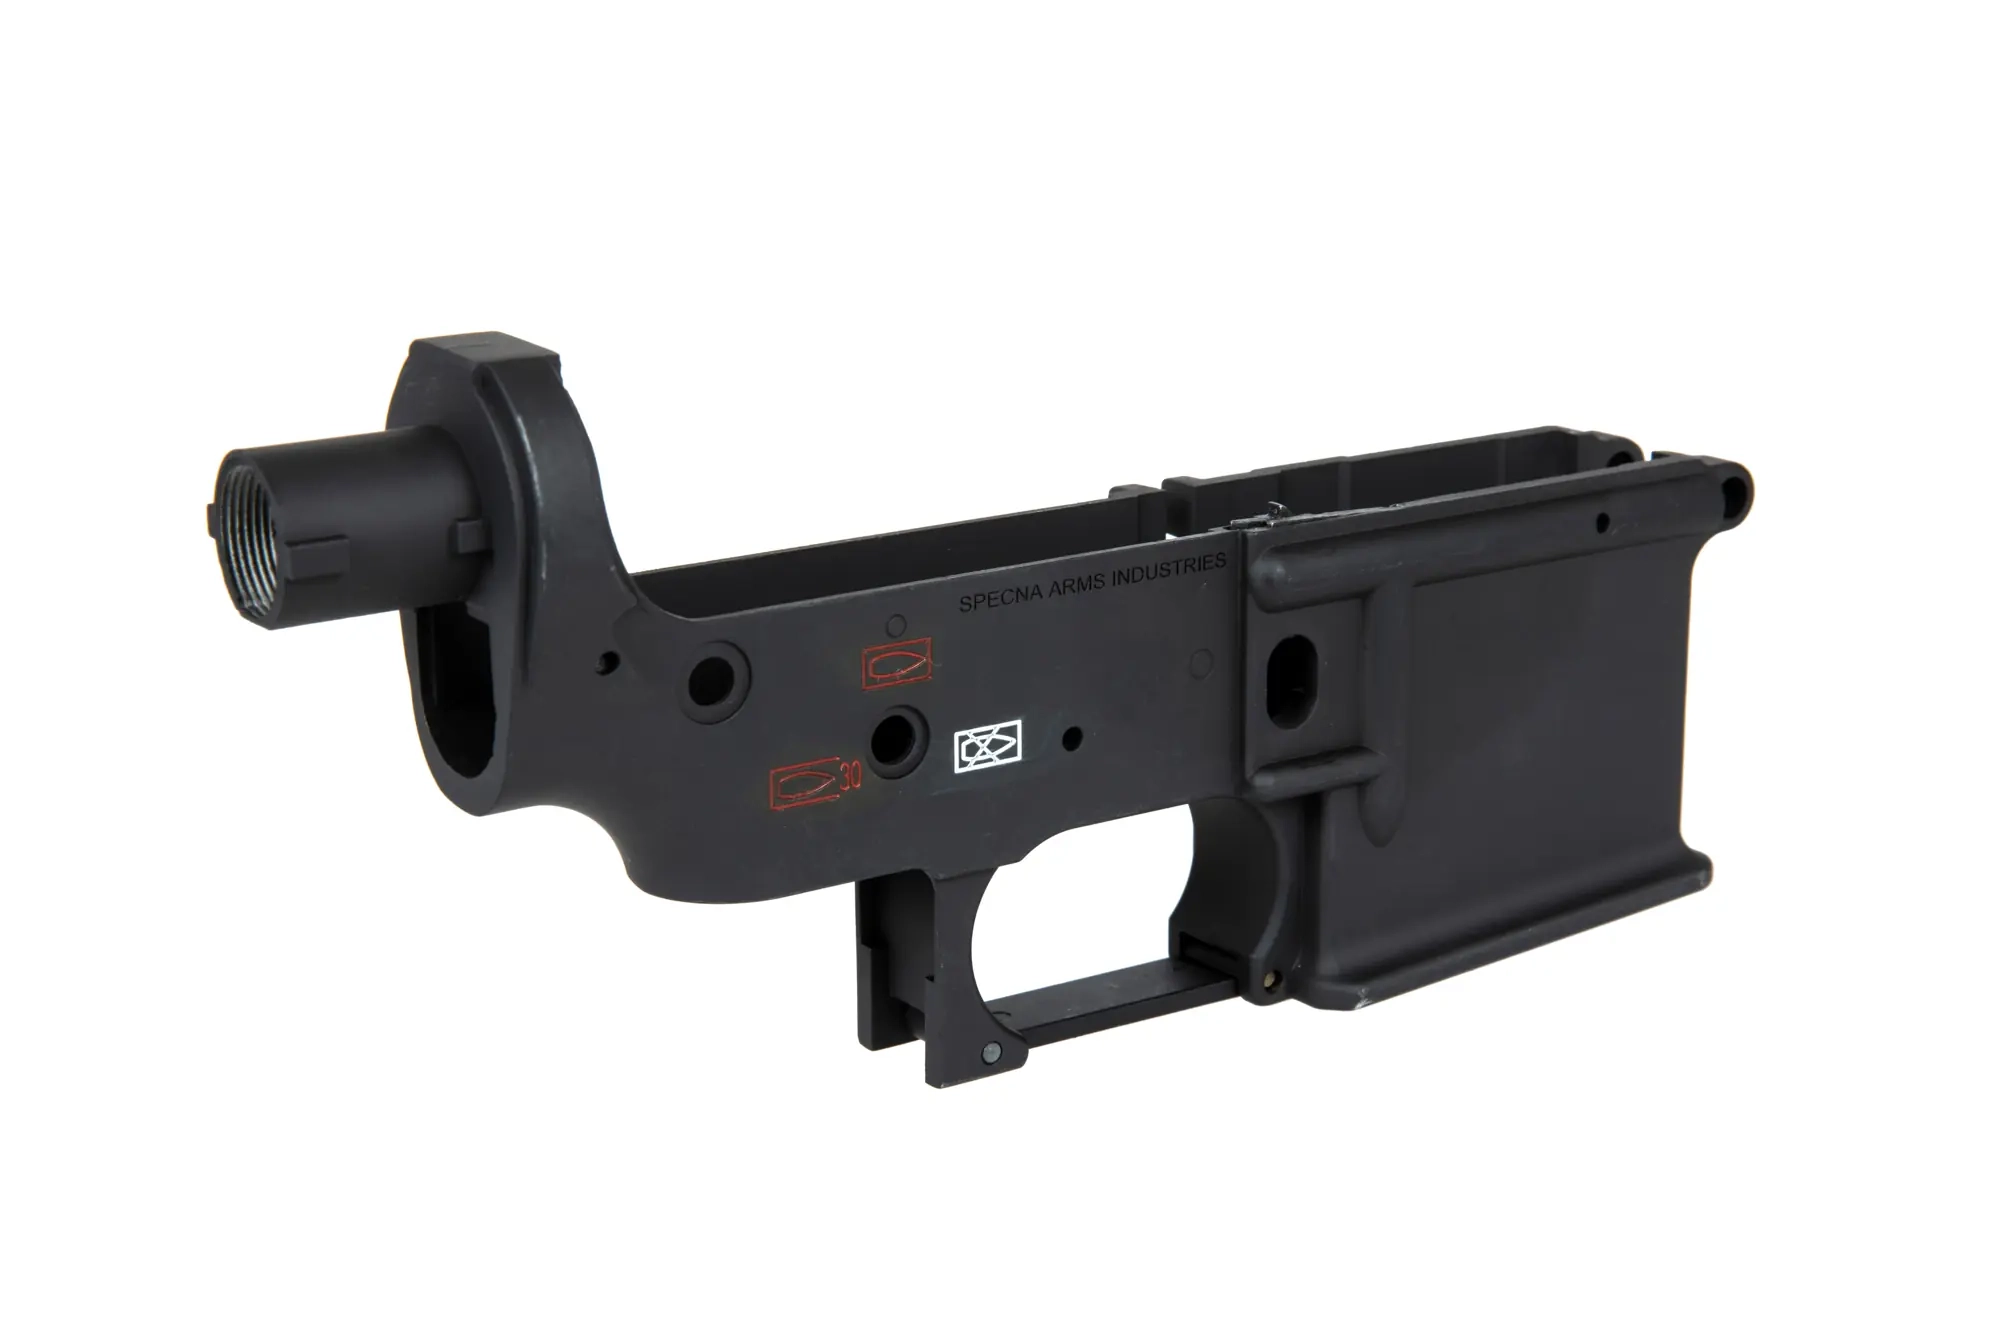 Specna Arms H EDGE 2.0 alarunko, metallinen - musta